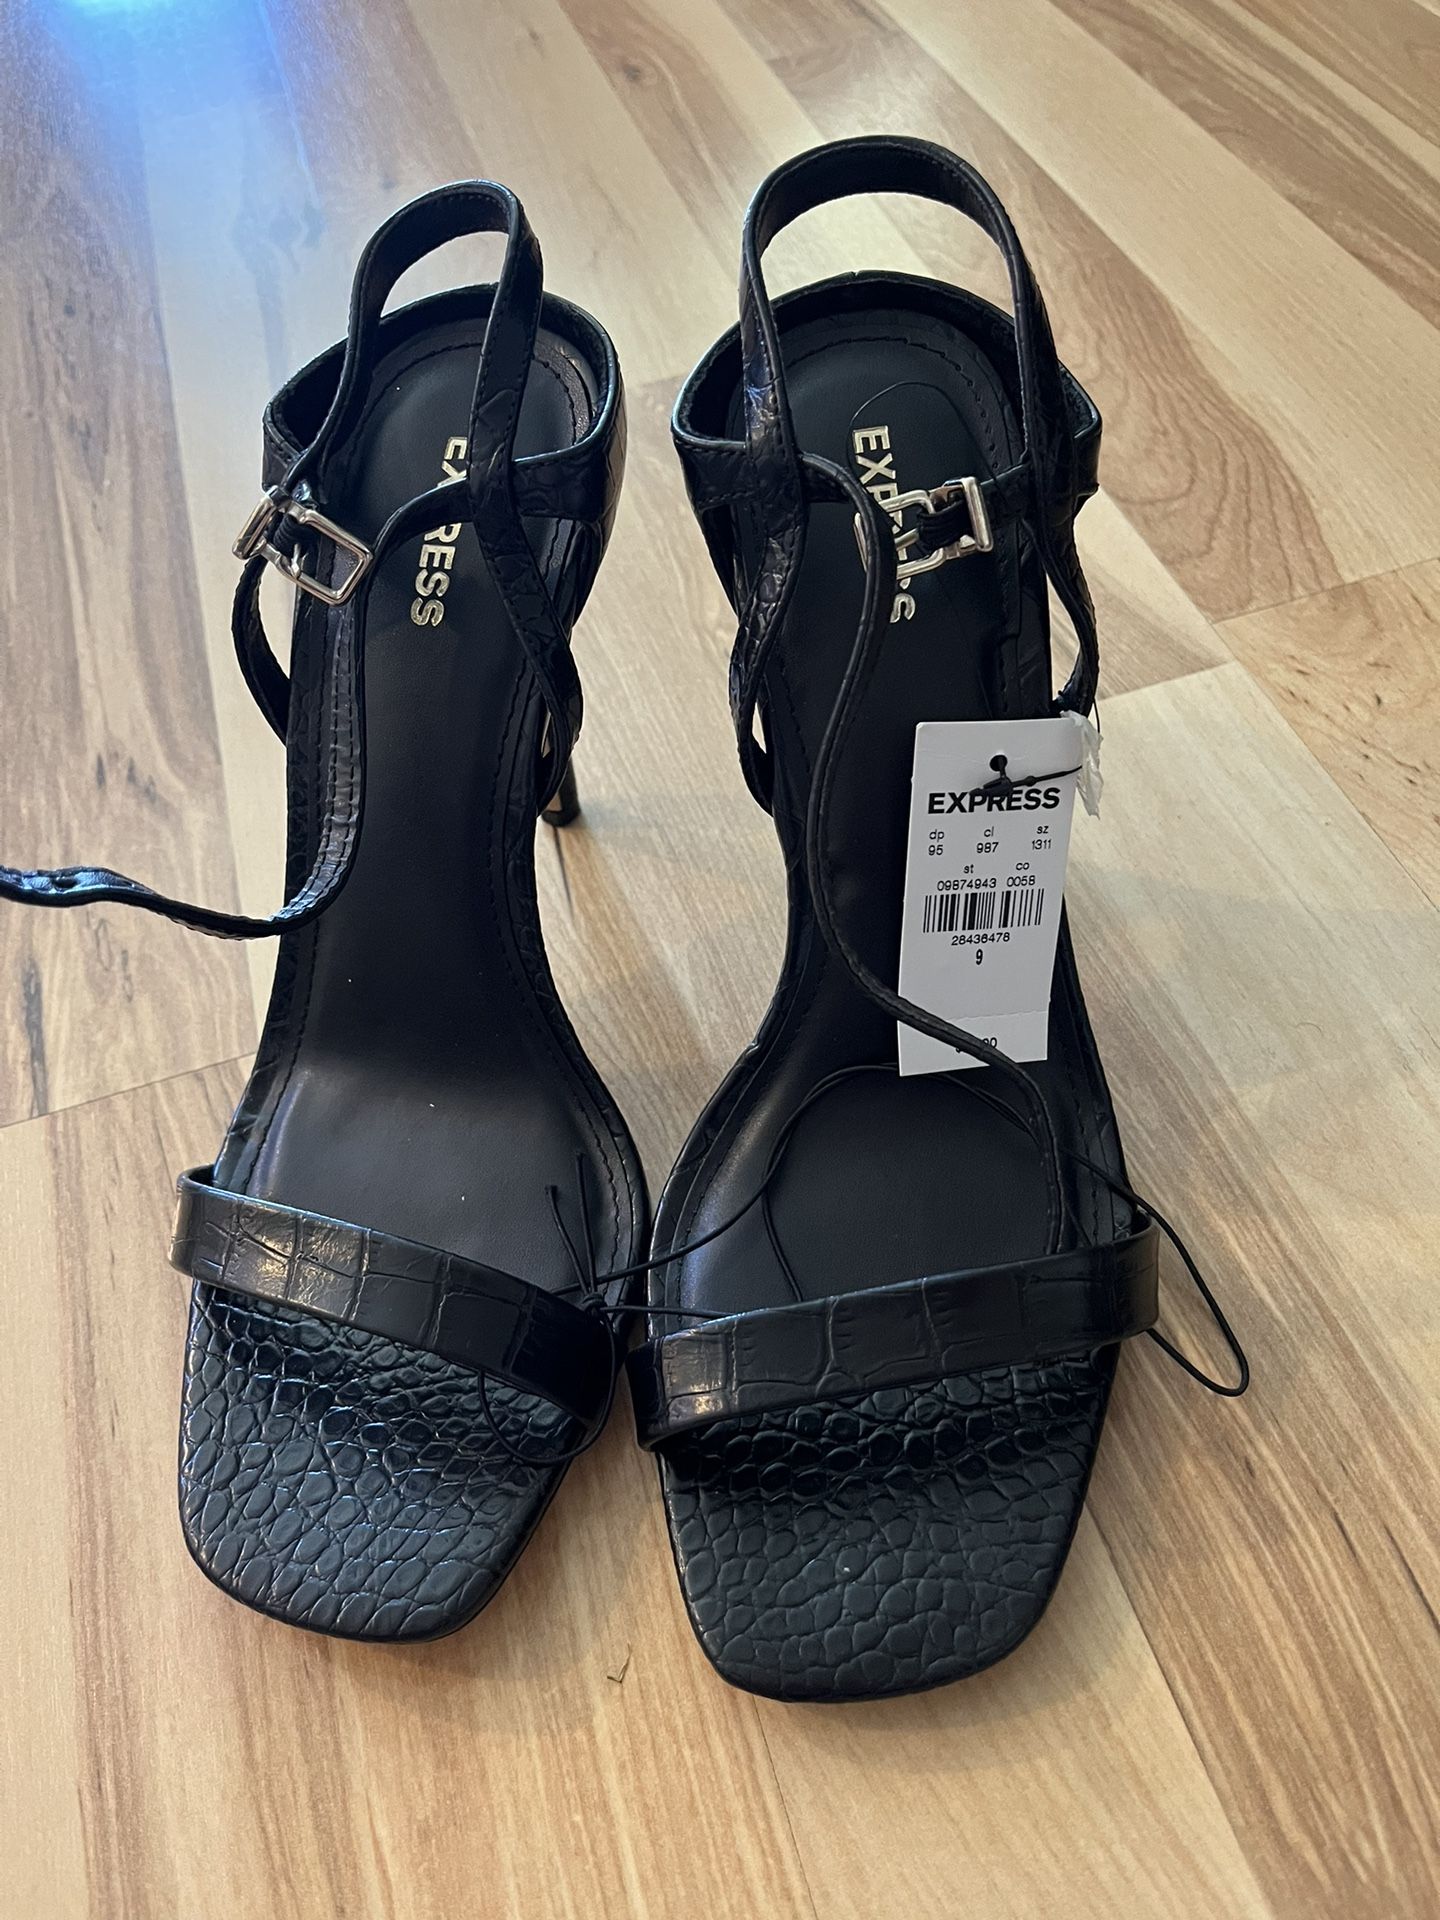 Express Brand Black Heels Sandals